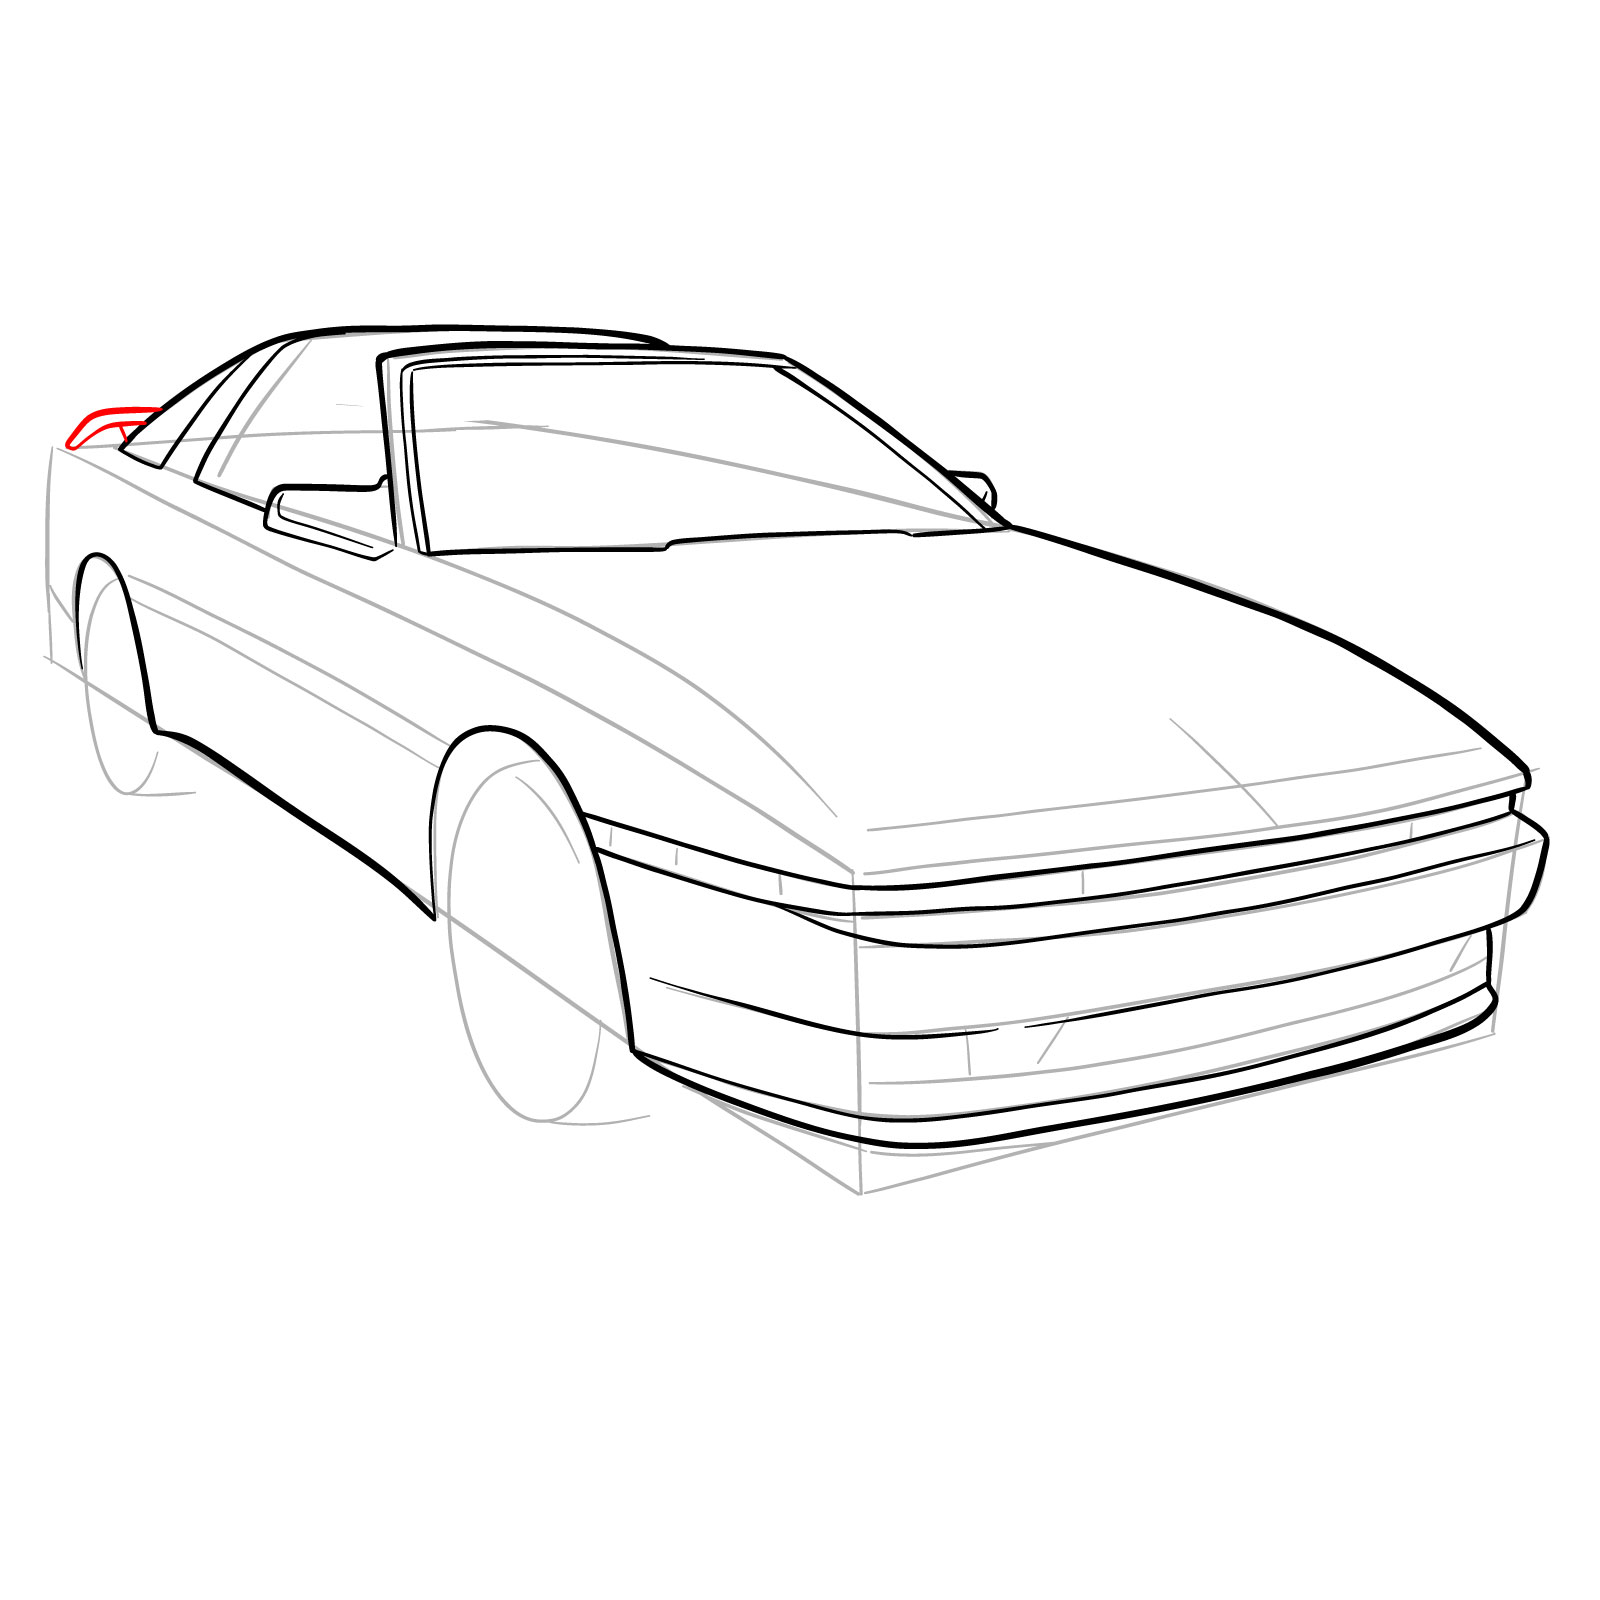 How to draw a 1988 Toyota Supra Turbo MK 3 - step 15